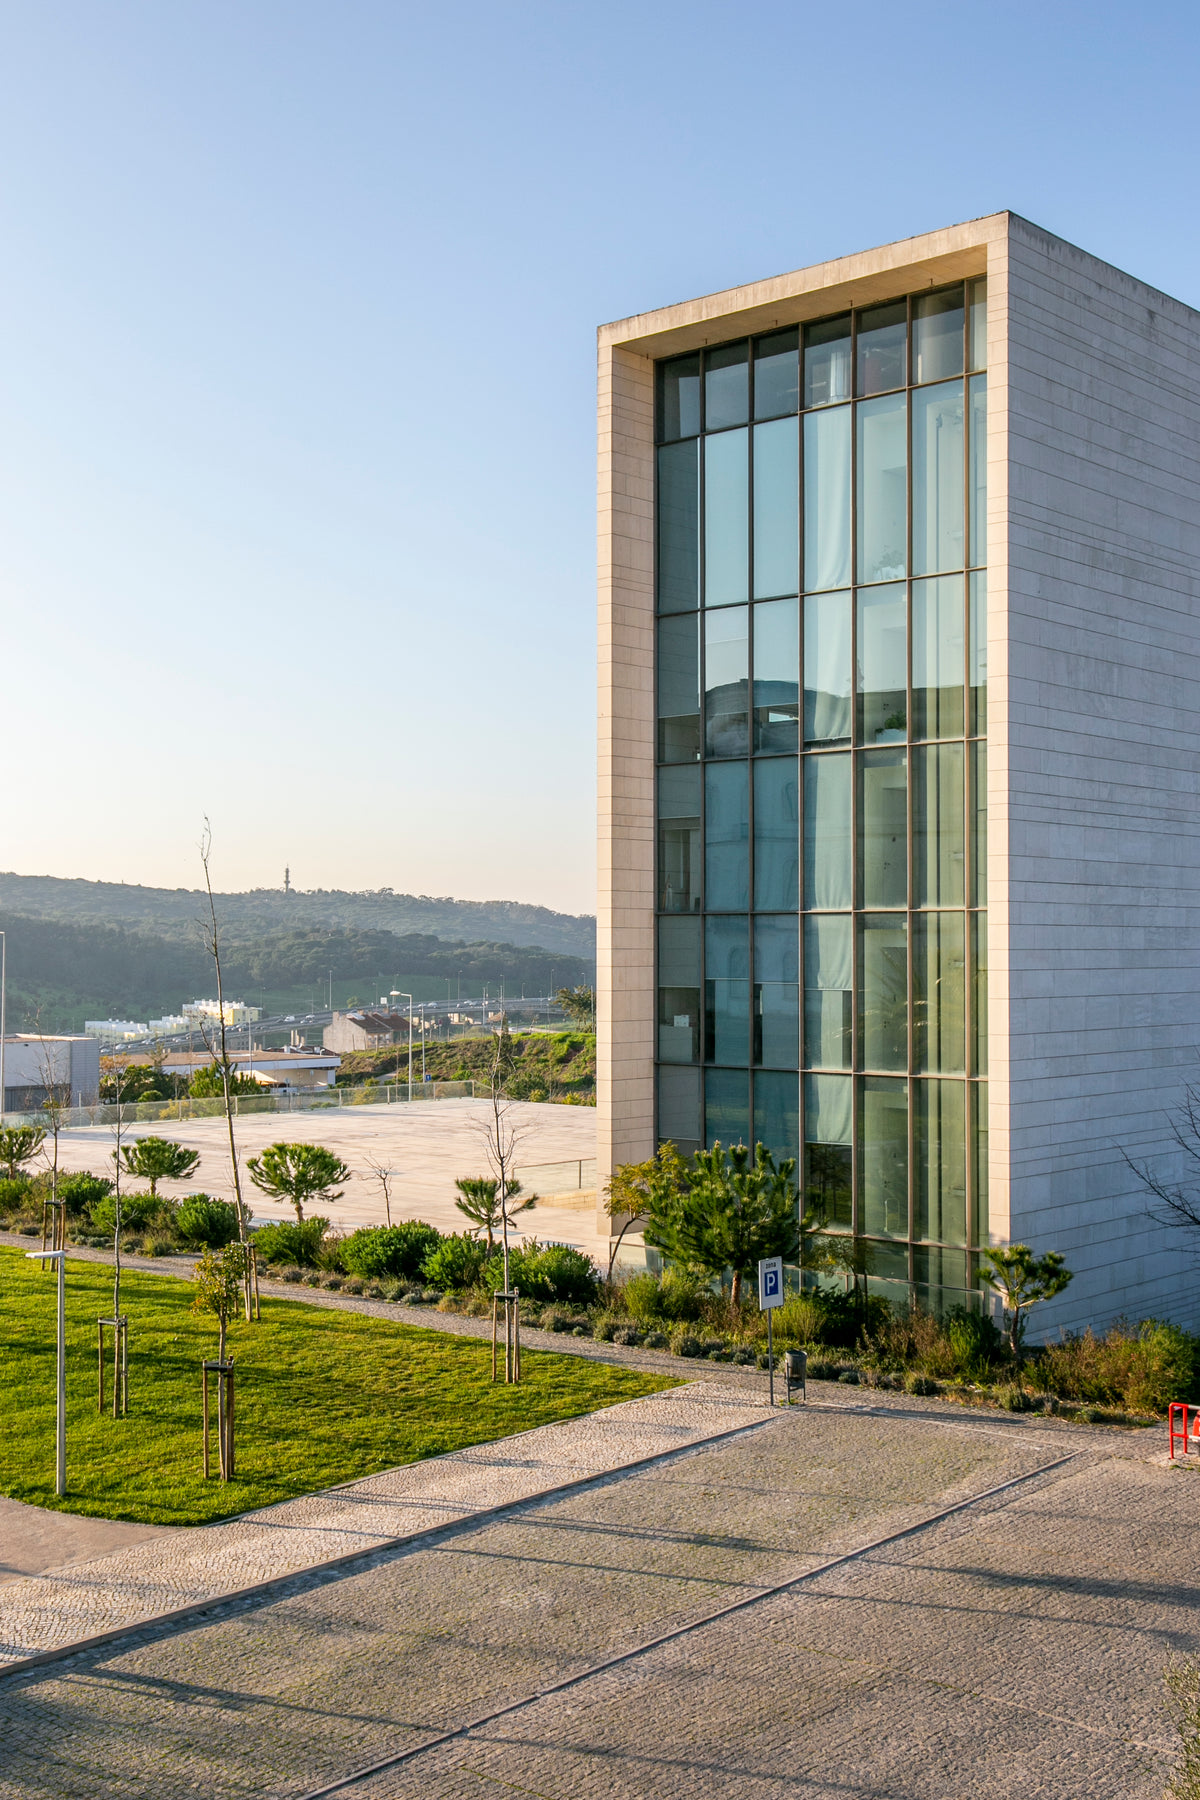 lisbon university building with glass windows